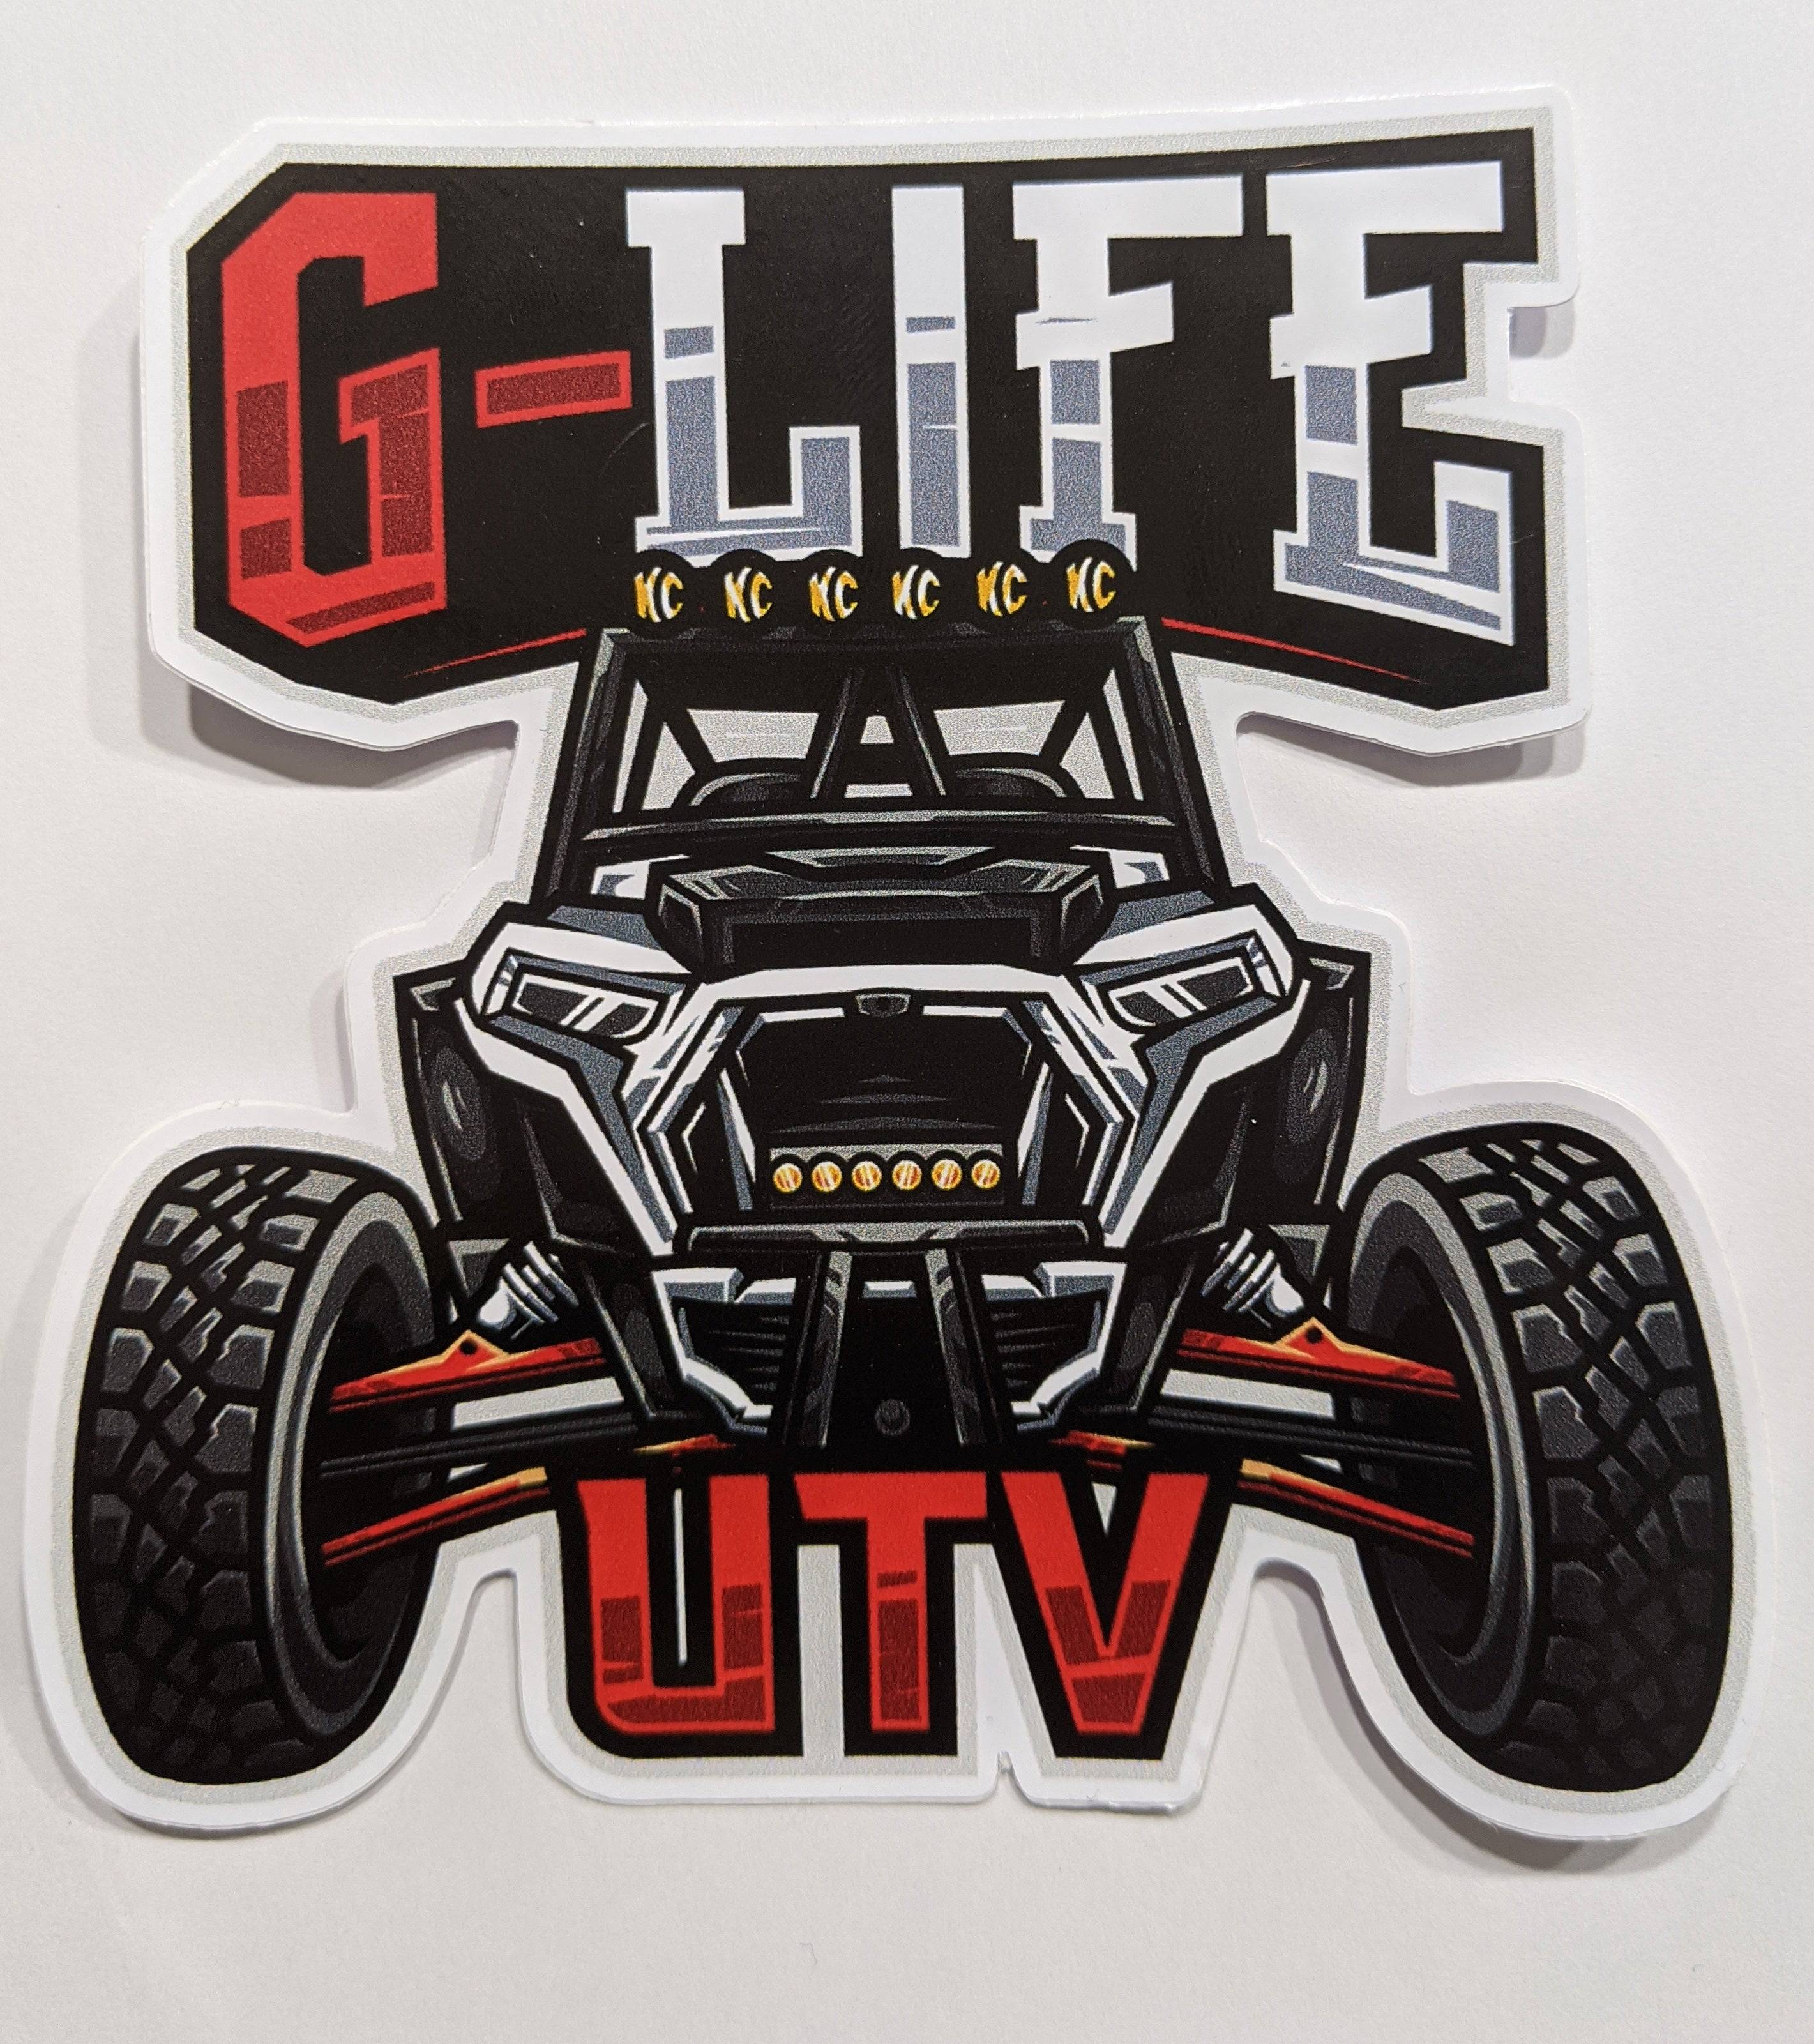 G-Life UTV Polaris RZR Sticker - G Life UTV Shop Parts